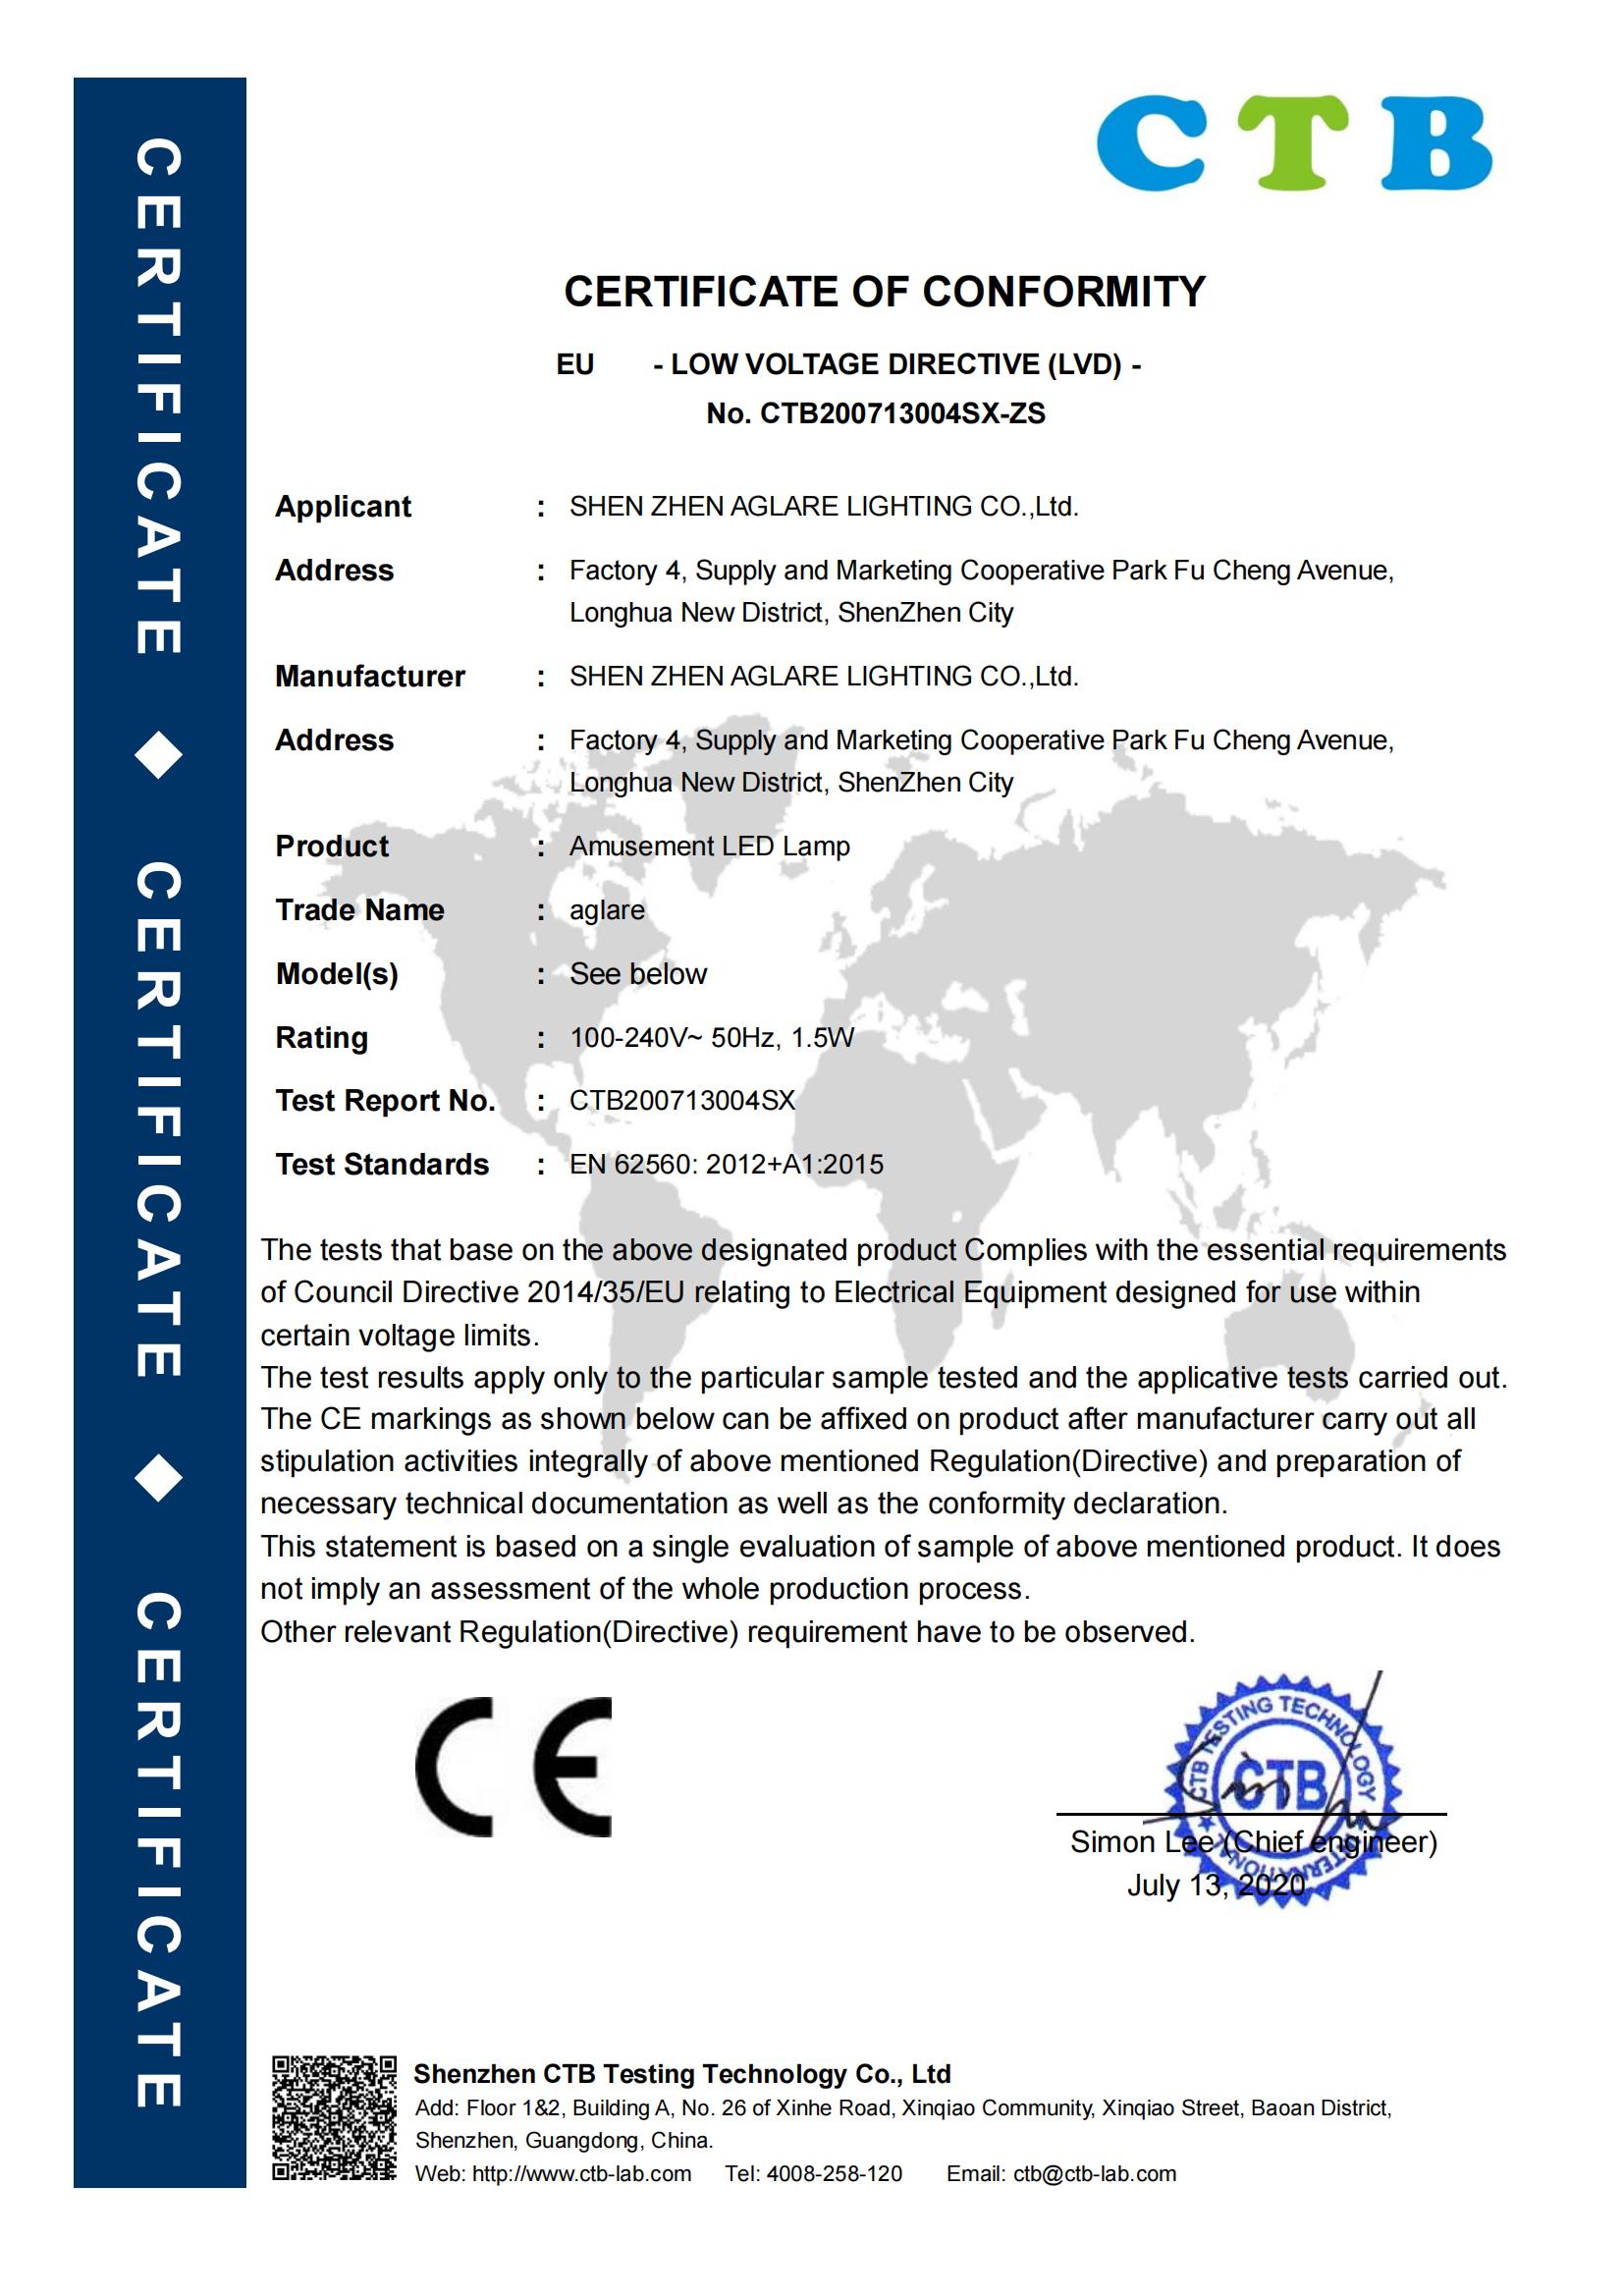 Aglare Lighting LED amusement lights CE-LVD certification Successfully!